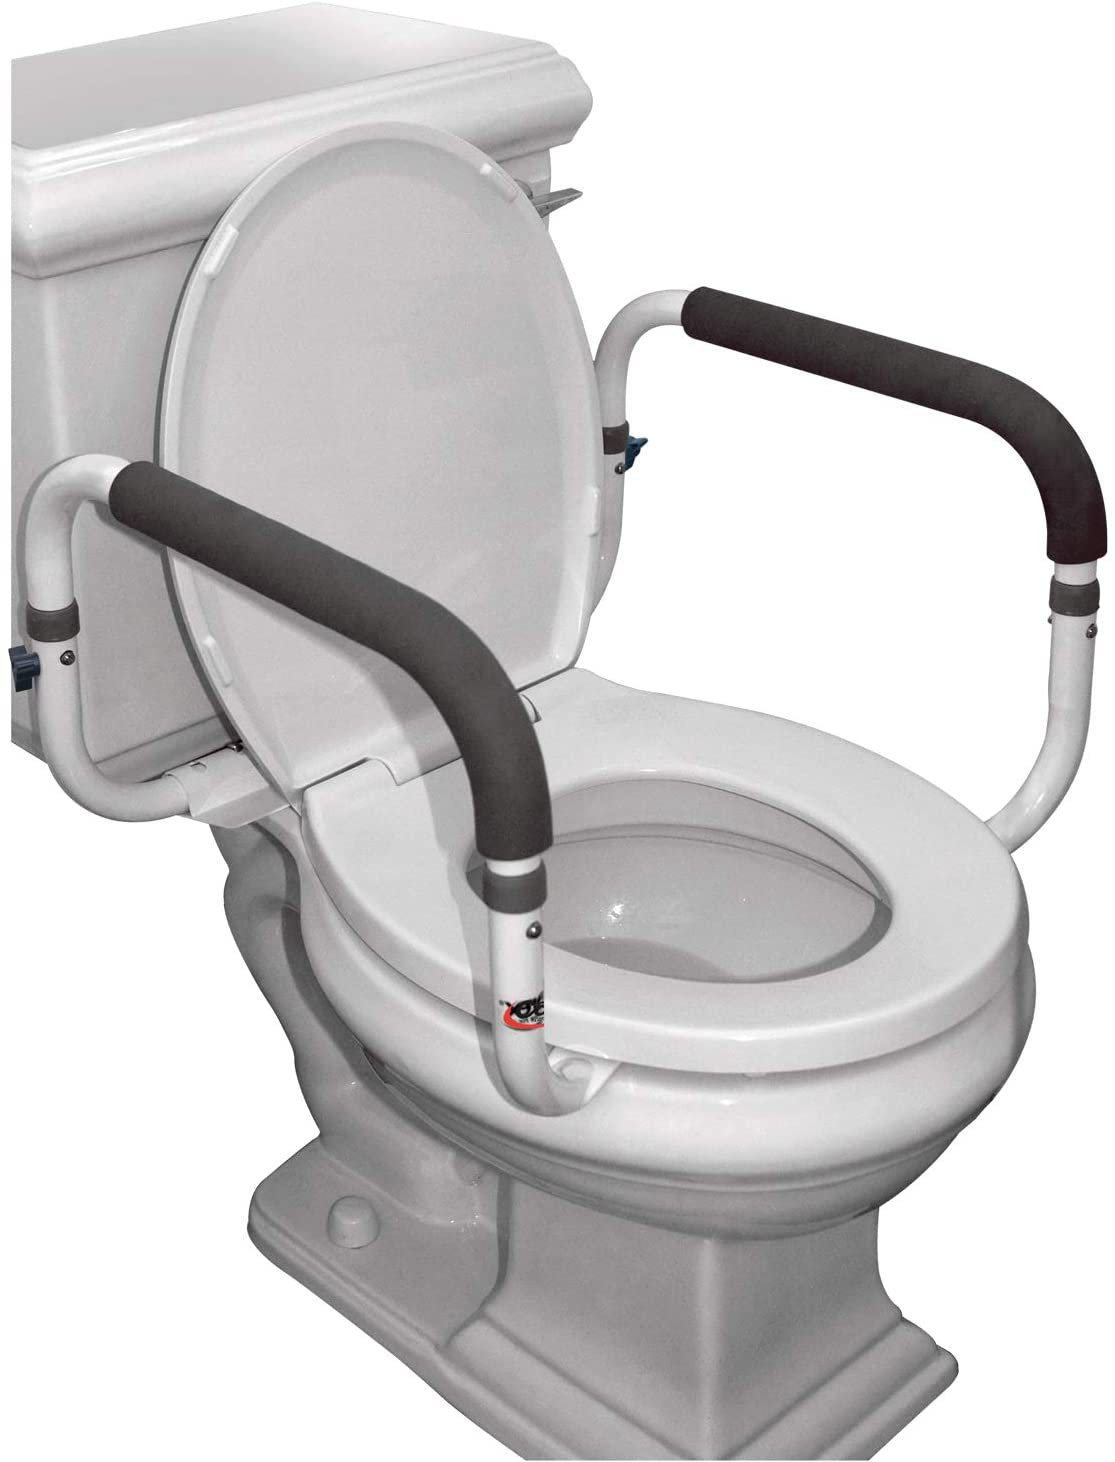 Carex Toilet Safety Frame - Toilet Safety Rails With serapportantà Bath Safety Supplies Dallas Tx 